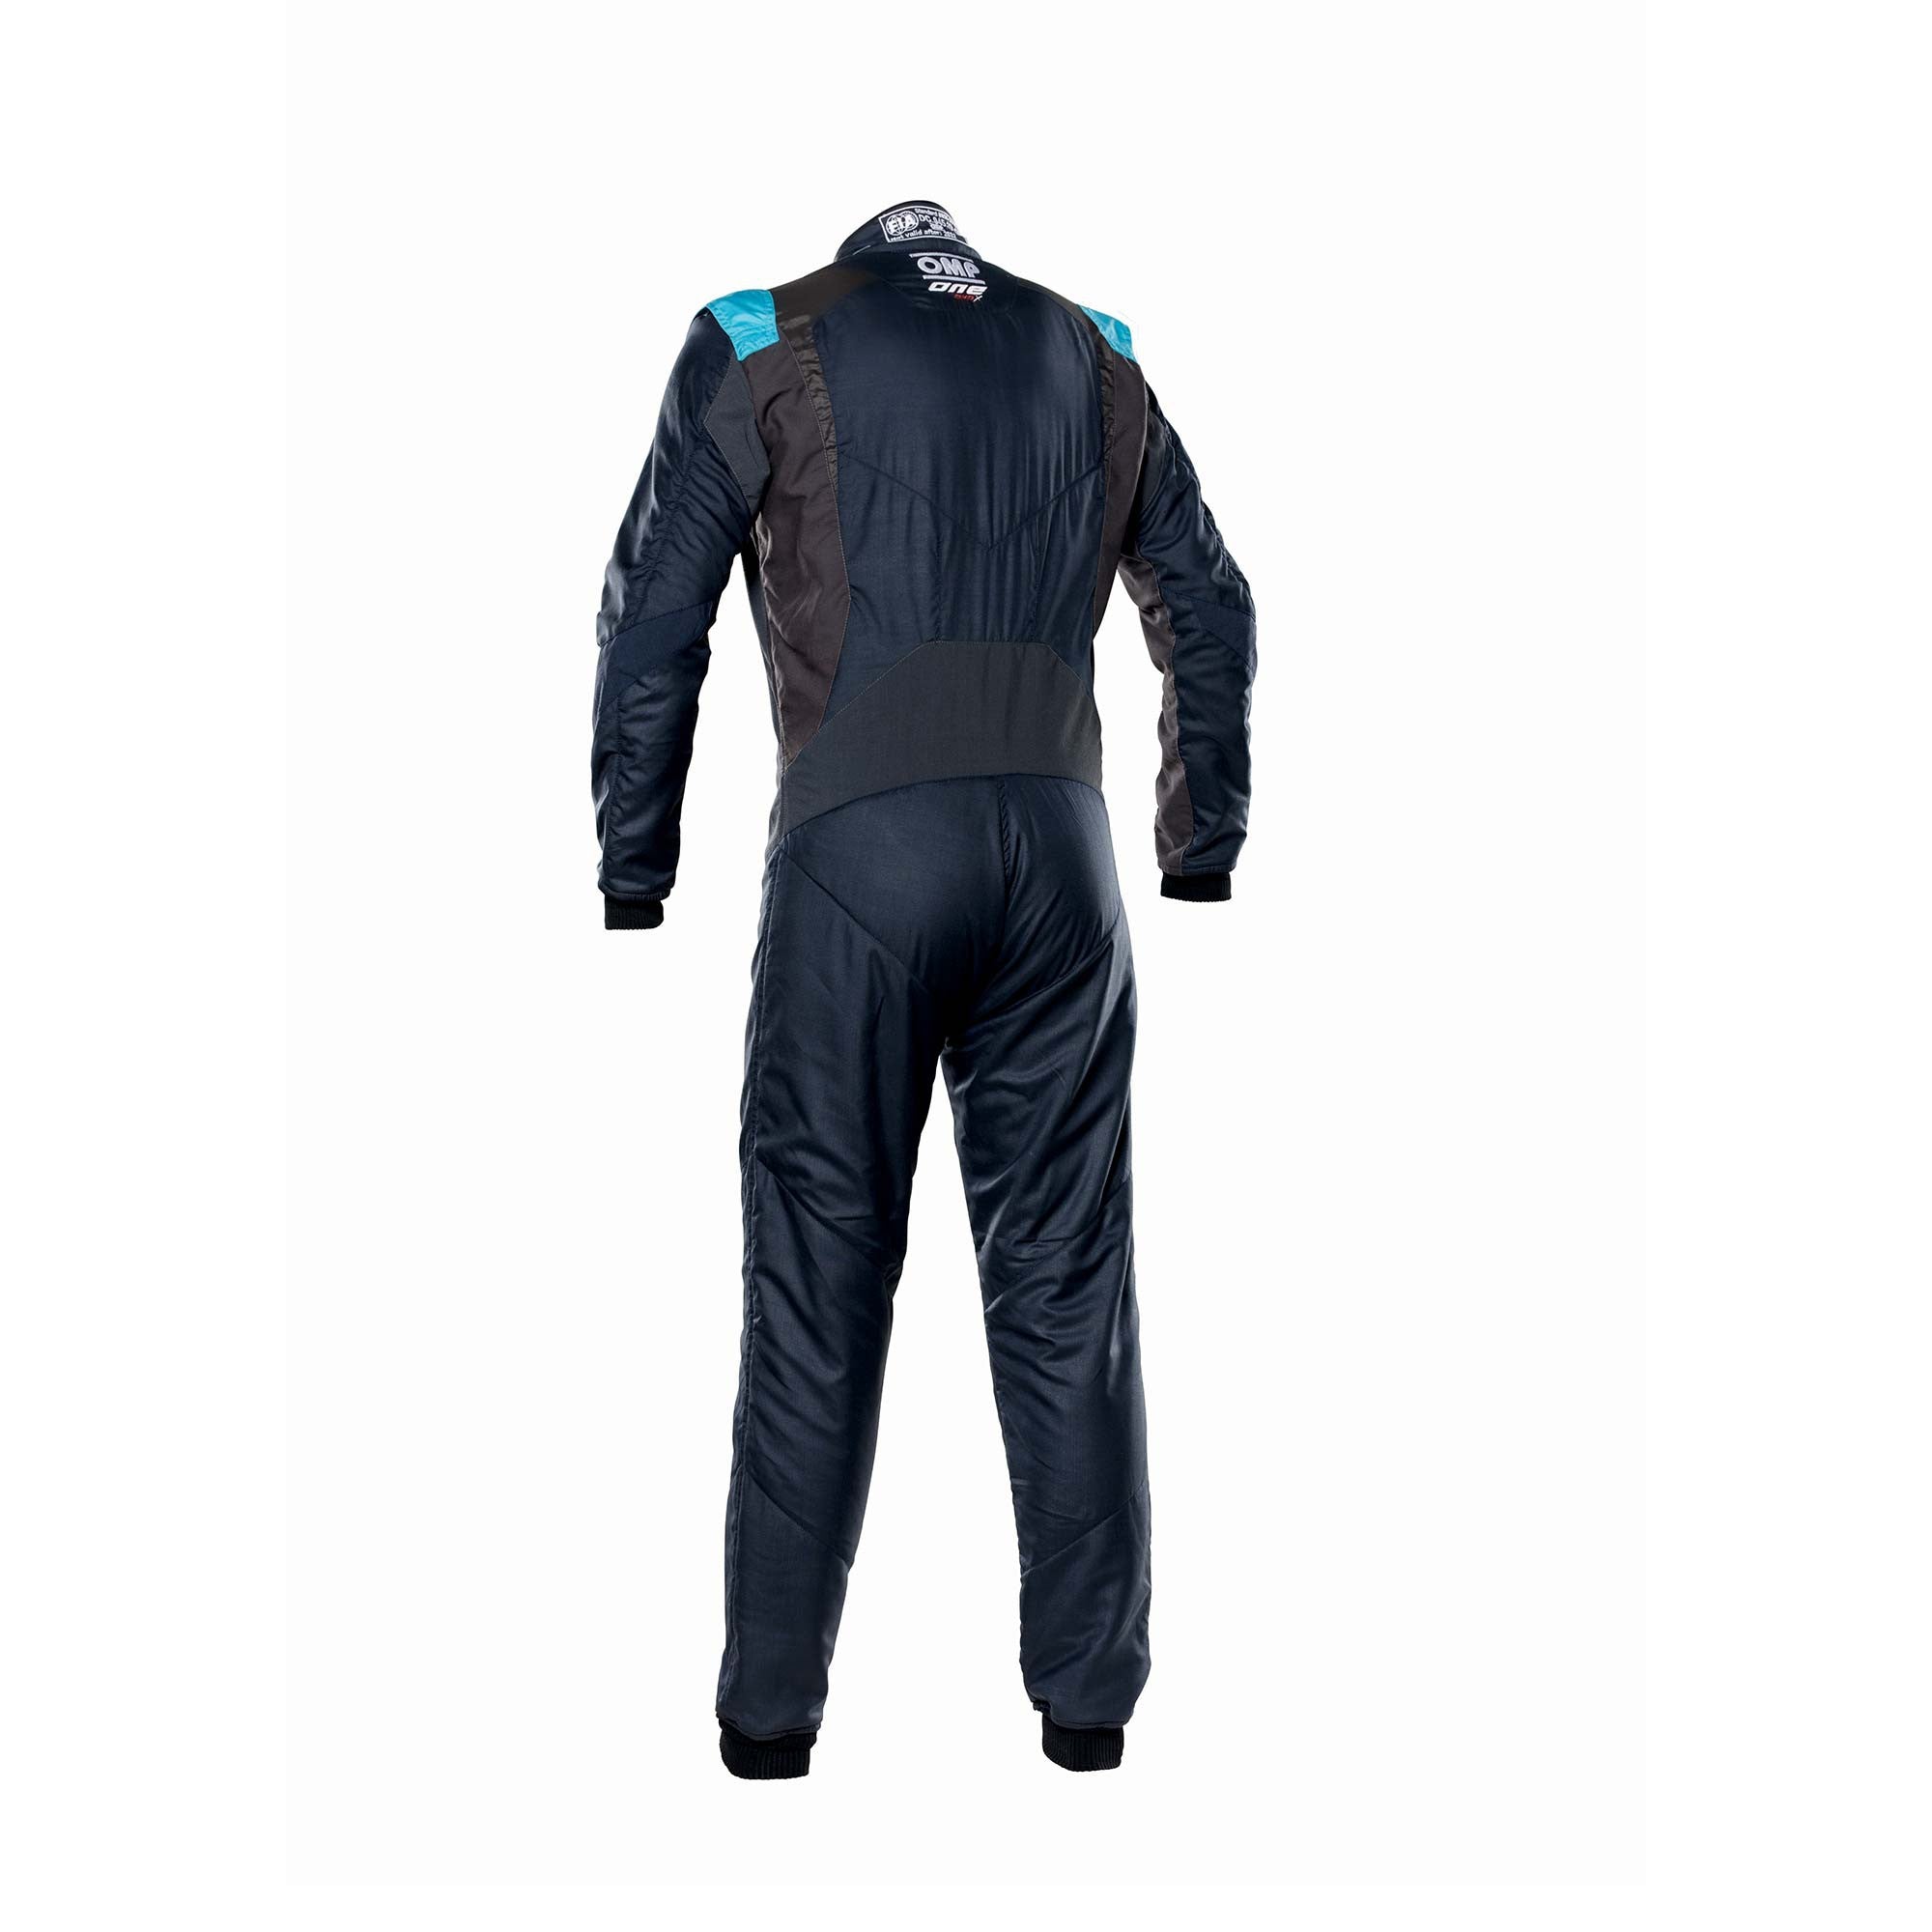 OMP IA0-1861-A01-246-46 Racing suit ONE EVO X, FIA 8856-2018, navy blue/gray/cyan, size 46 Photo-1 